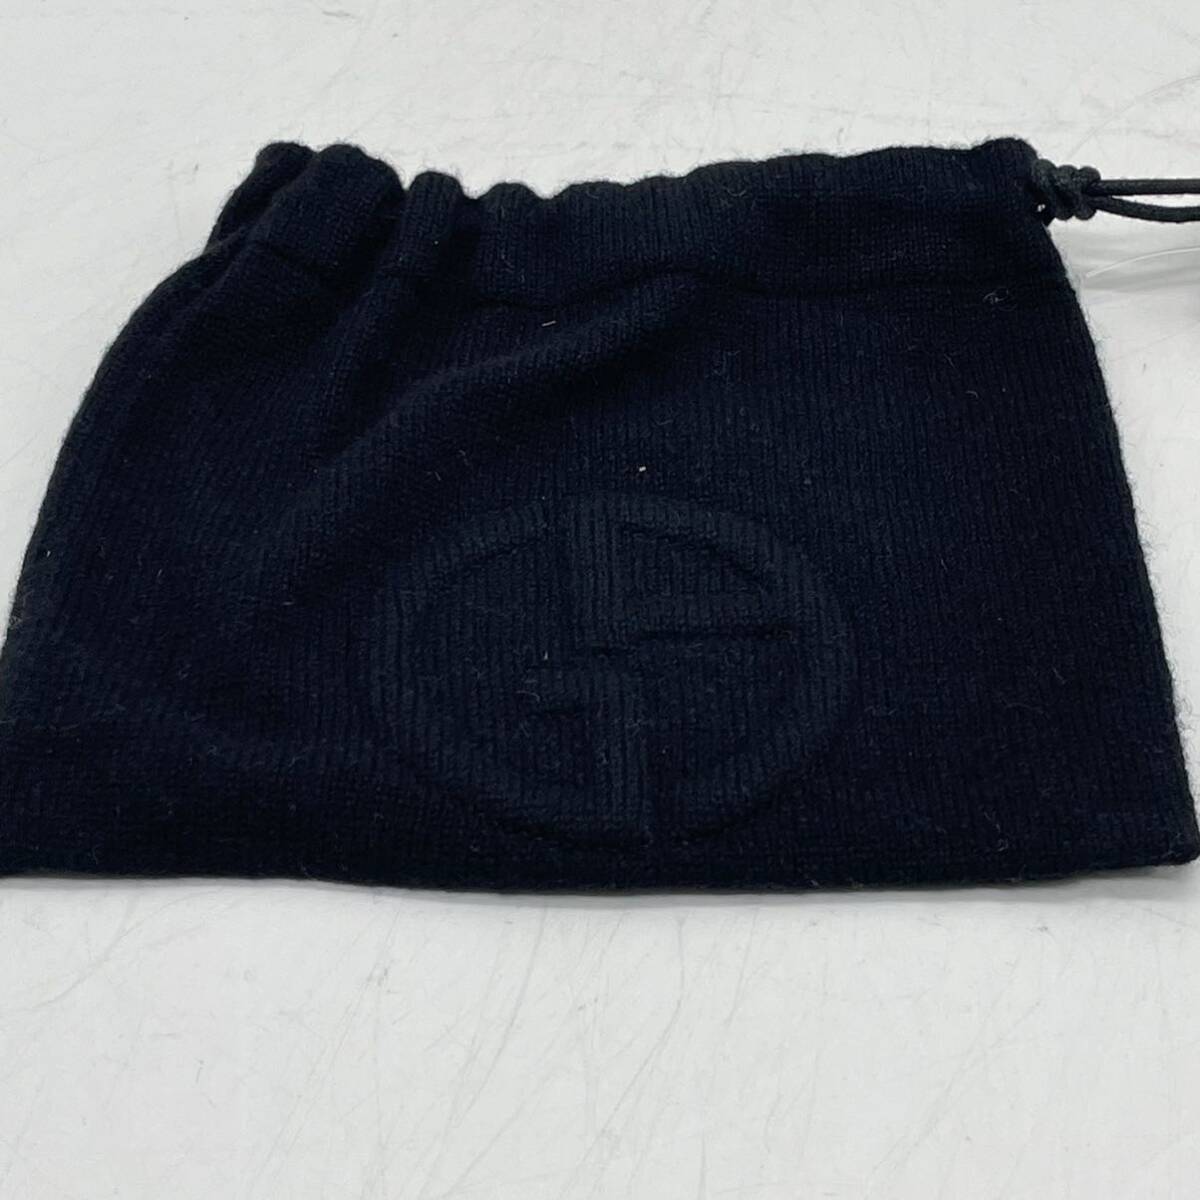 KO1846*GIORGIO ARMANIjoru geo Armani Italy made cashmere knit cap Beanie hat Mini pouch attaching tag attaching unused goods 